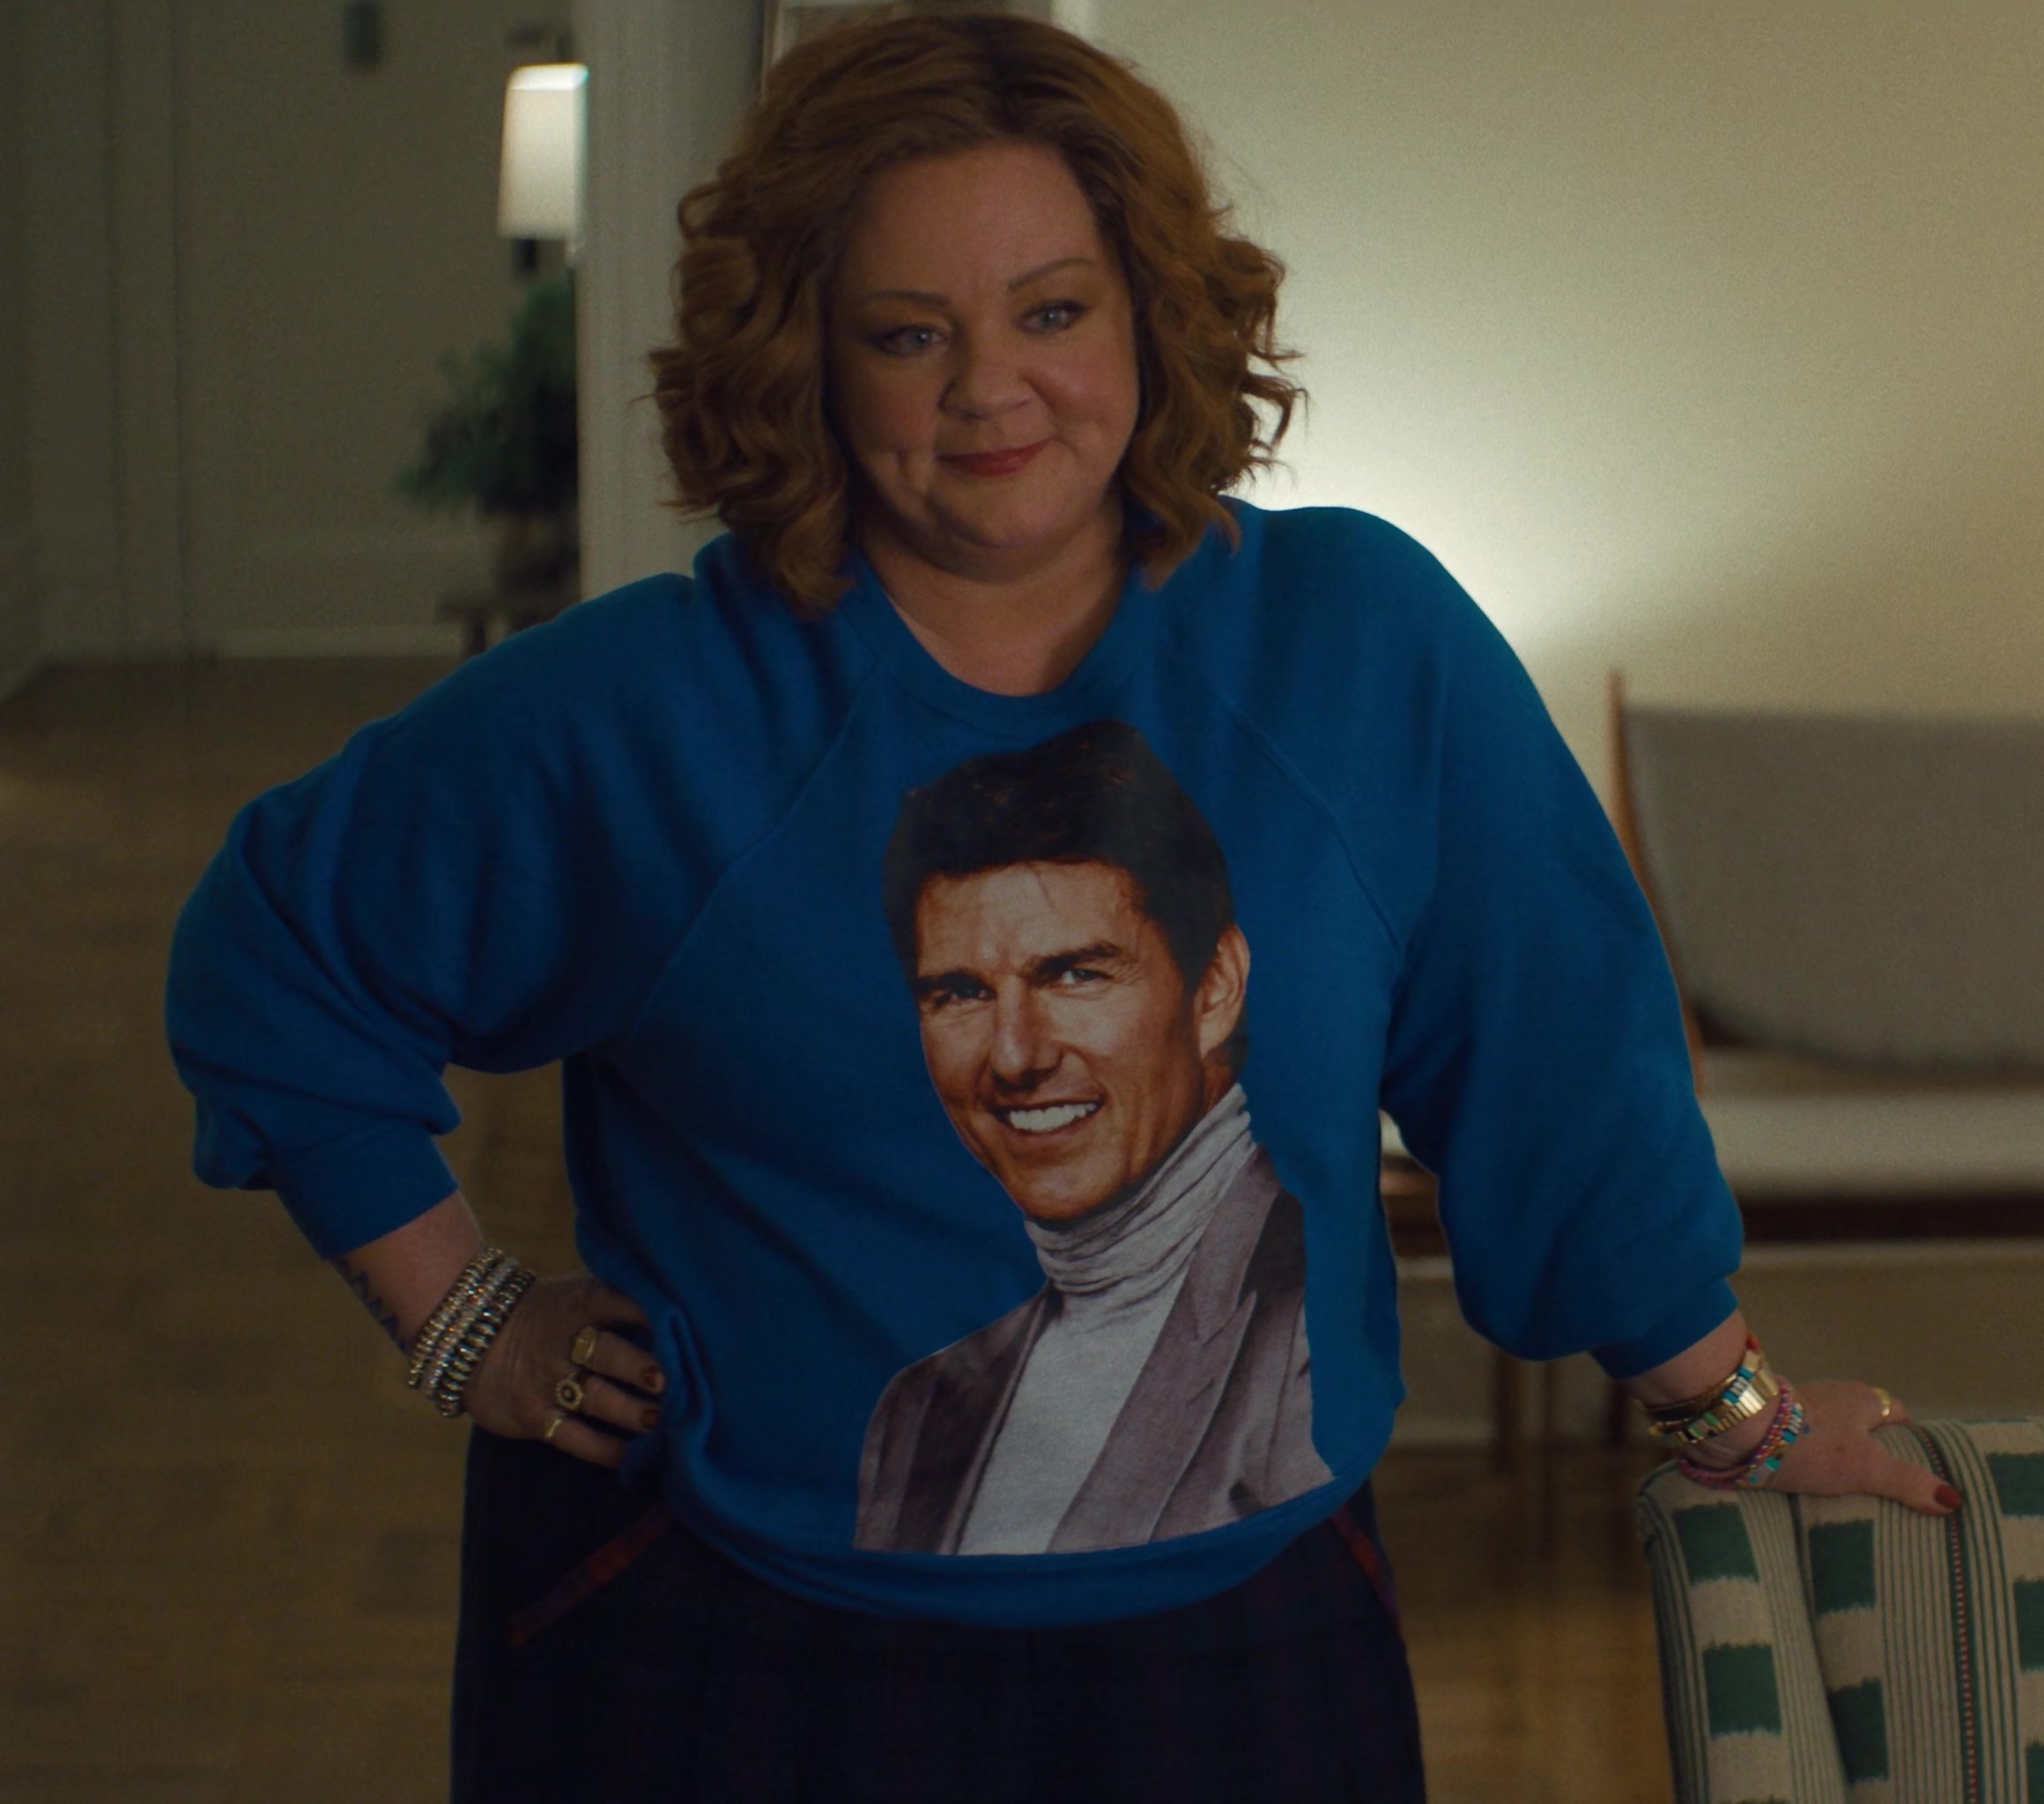 Worn on Genie (2023) Movie - Blue Crewneck Sweatshirt with Tom Cruise Graphic Print Worn by Melissa McCarthy as Flora